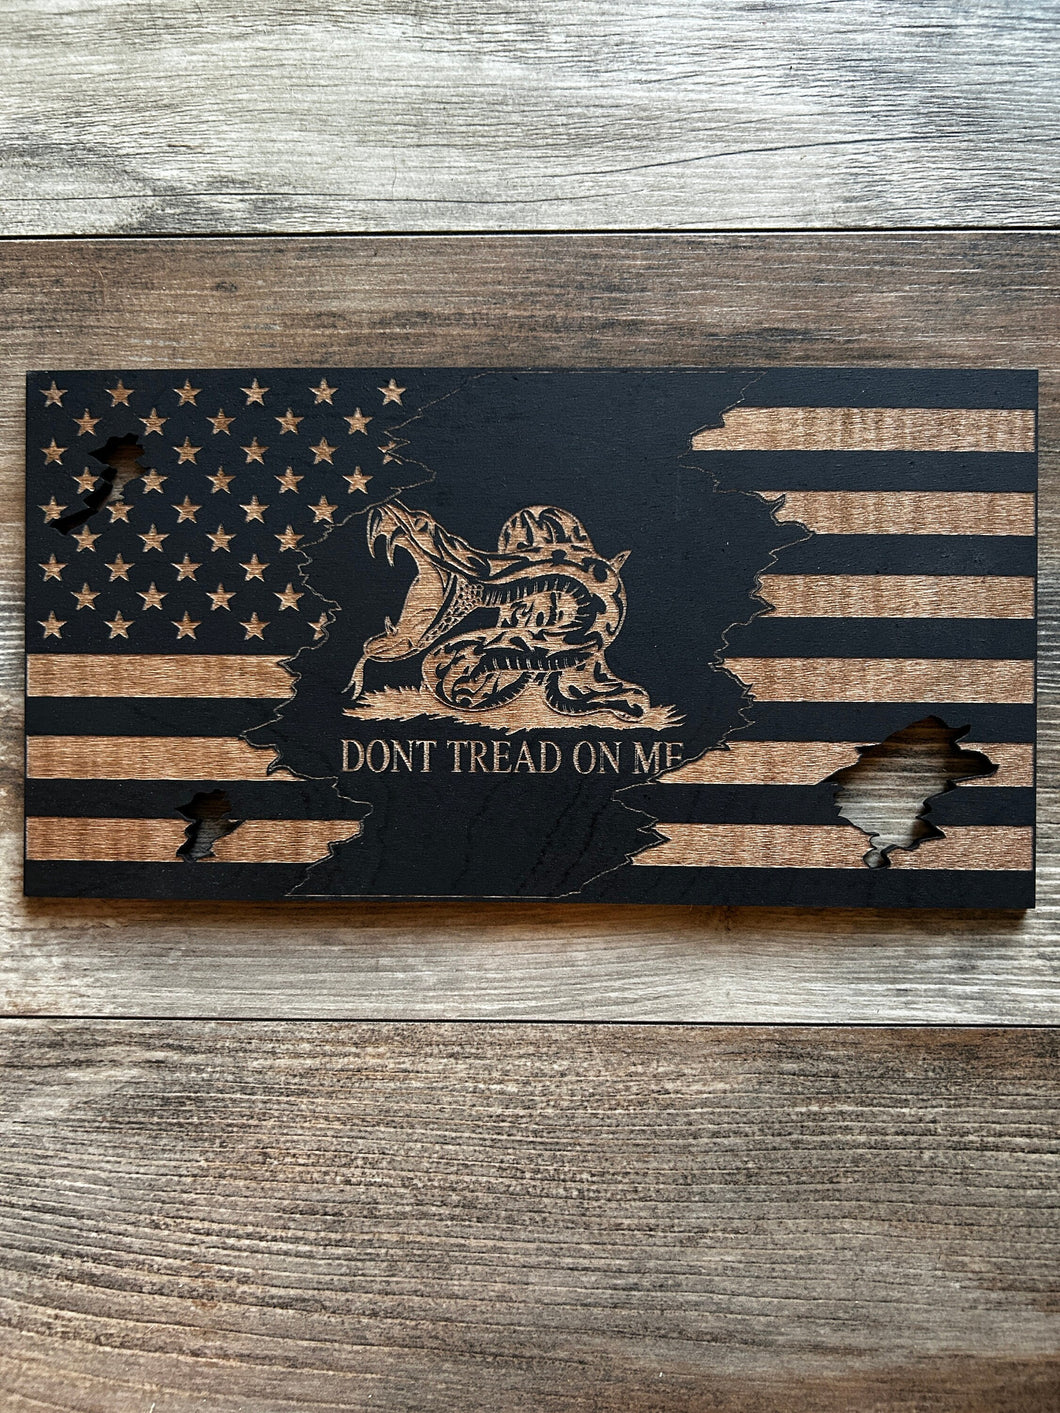 Don't Tread On Me Wood Flag, Dont Tread on Me, Wood Flag, Patriot, American Flag, Wood Decor, Wood Sign